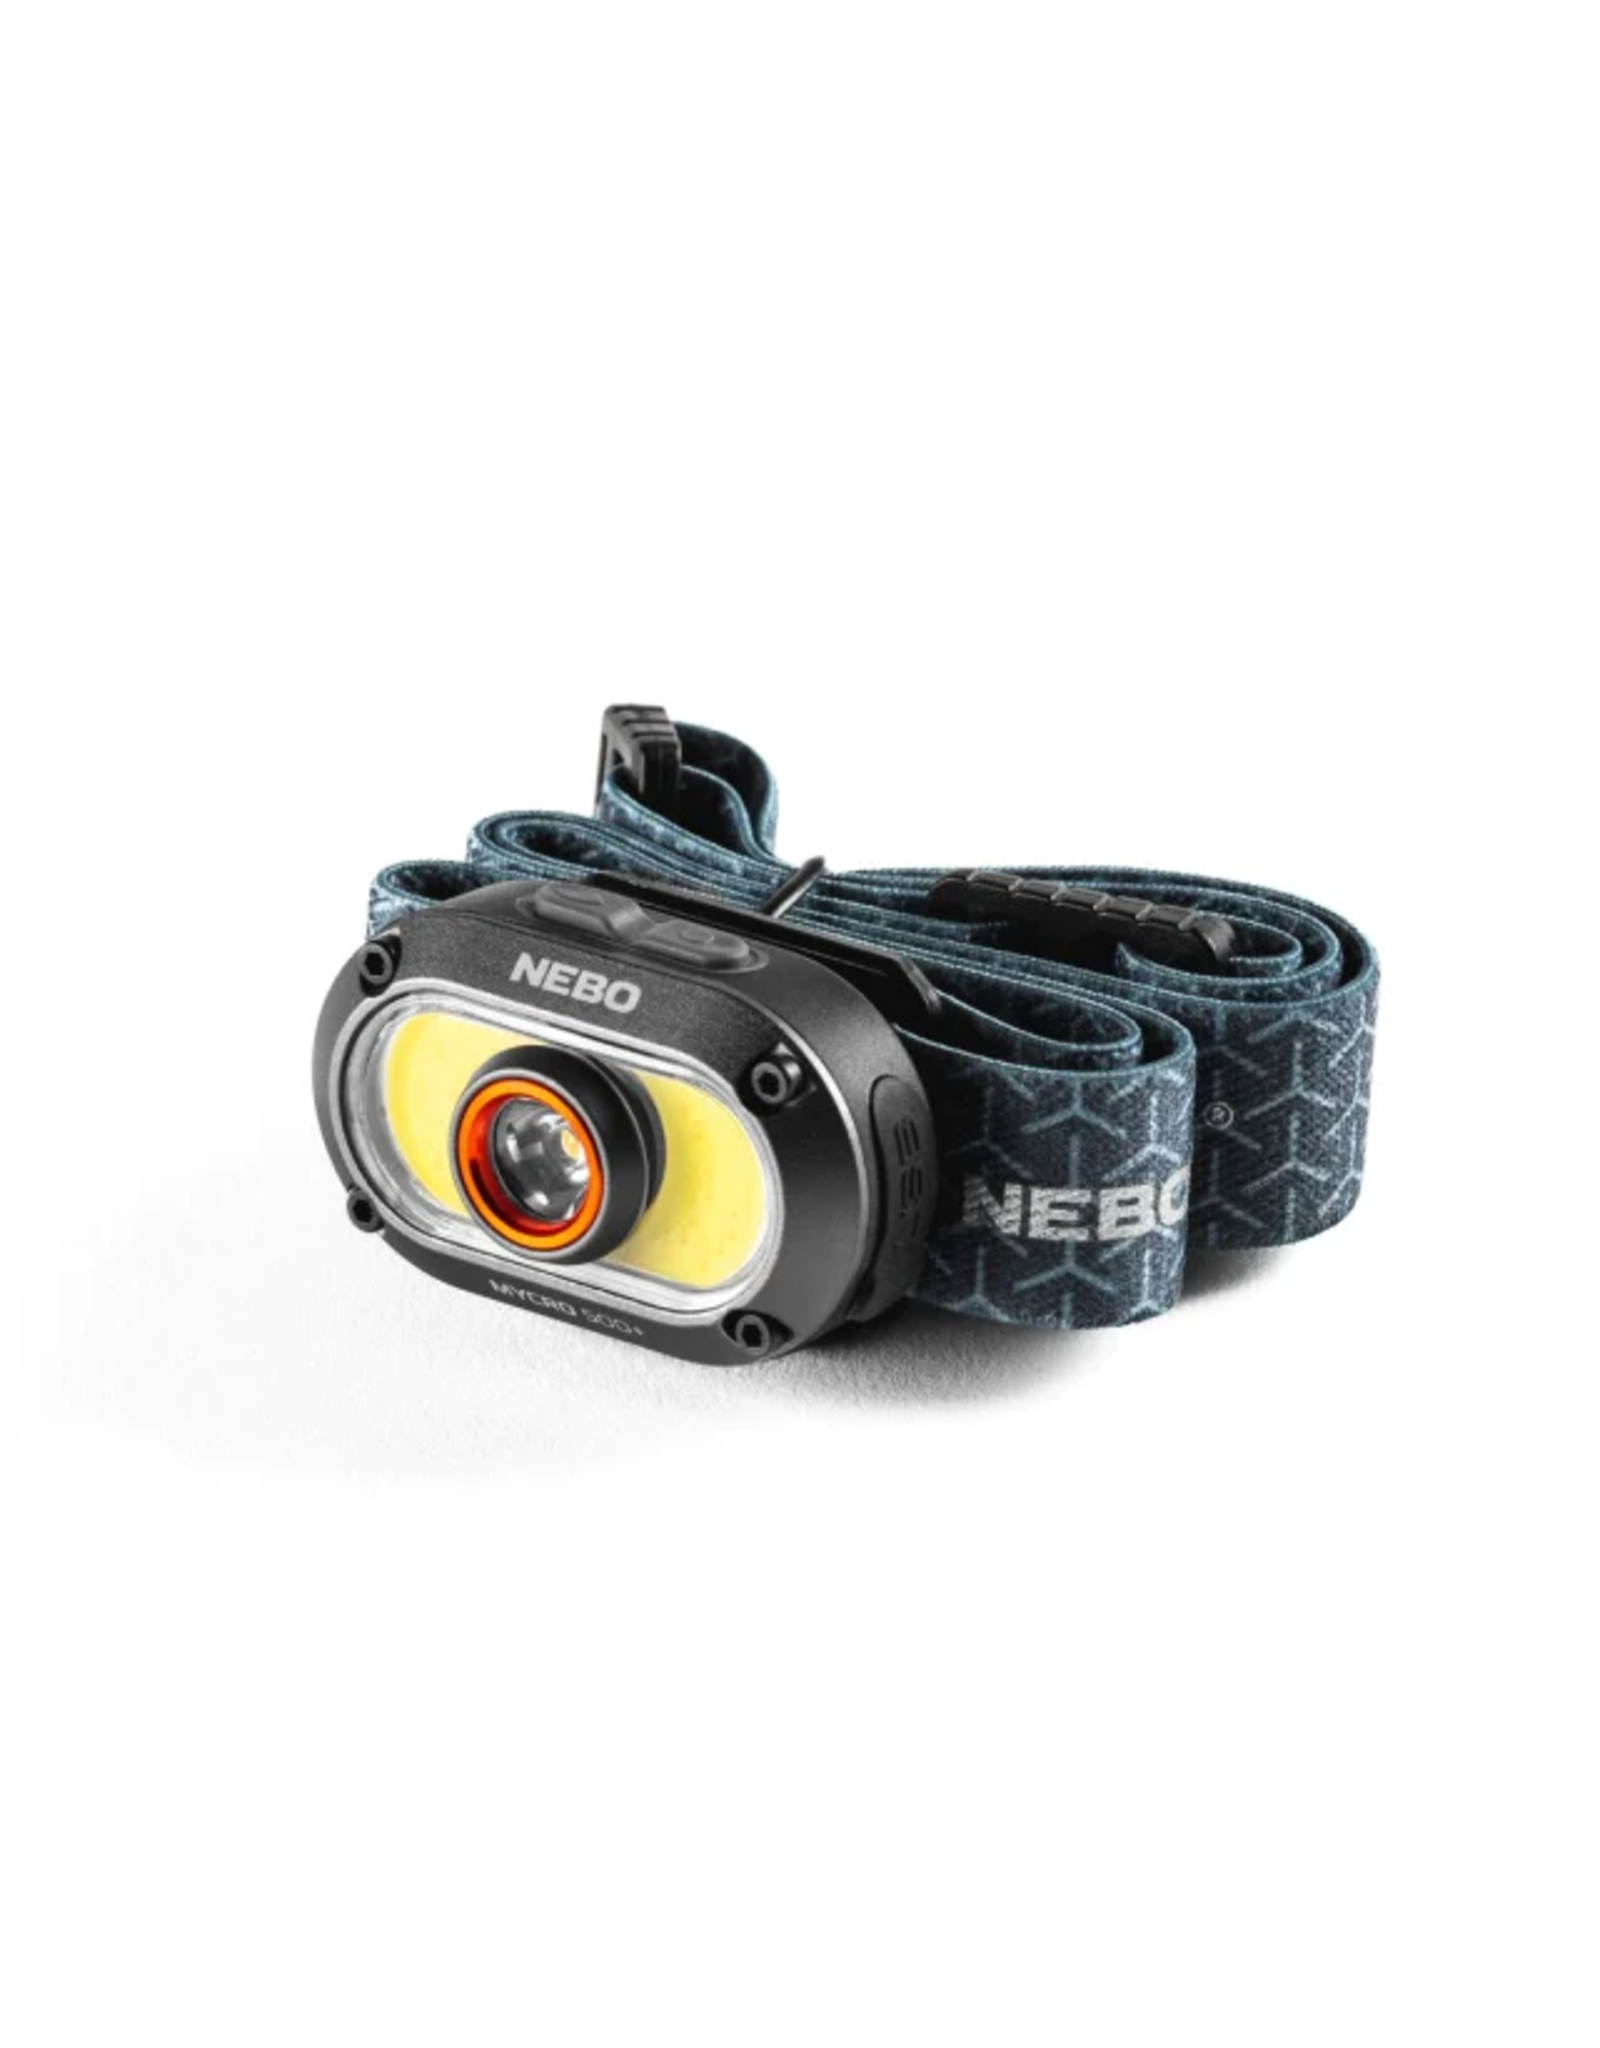 Nebo Nebo Mycro 500+ Headlamp & Cap Light